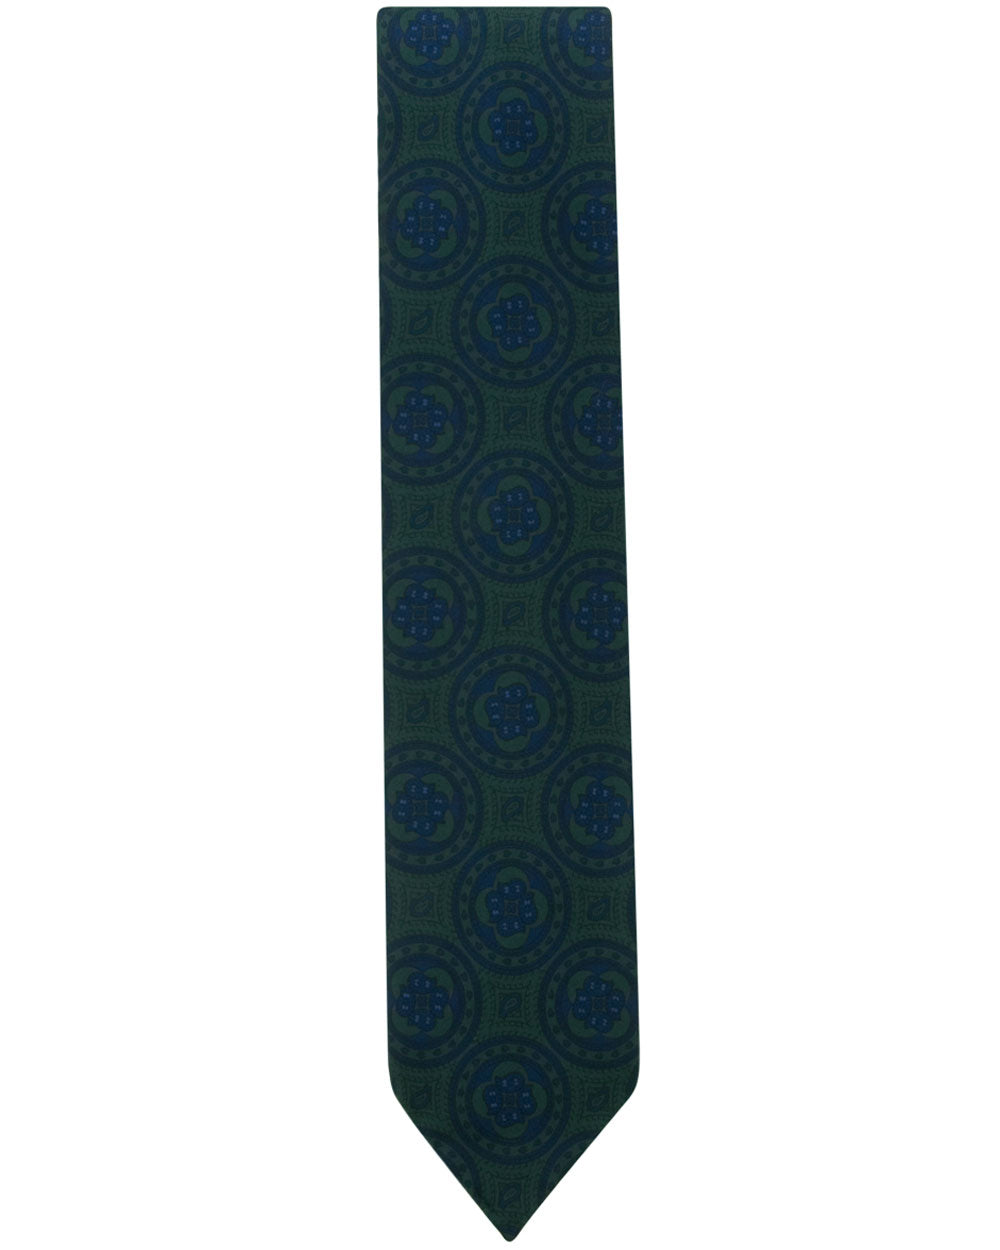 Dark Green and Blue Paisley Circle Tie